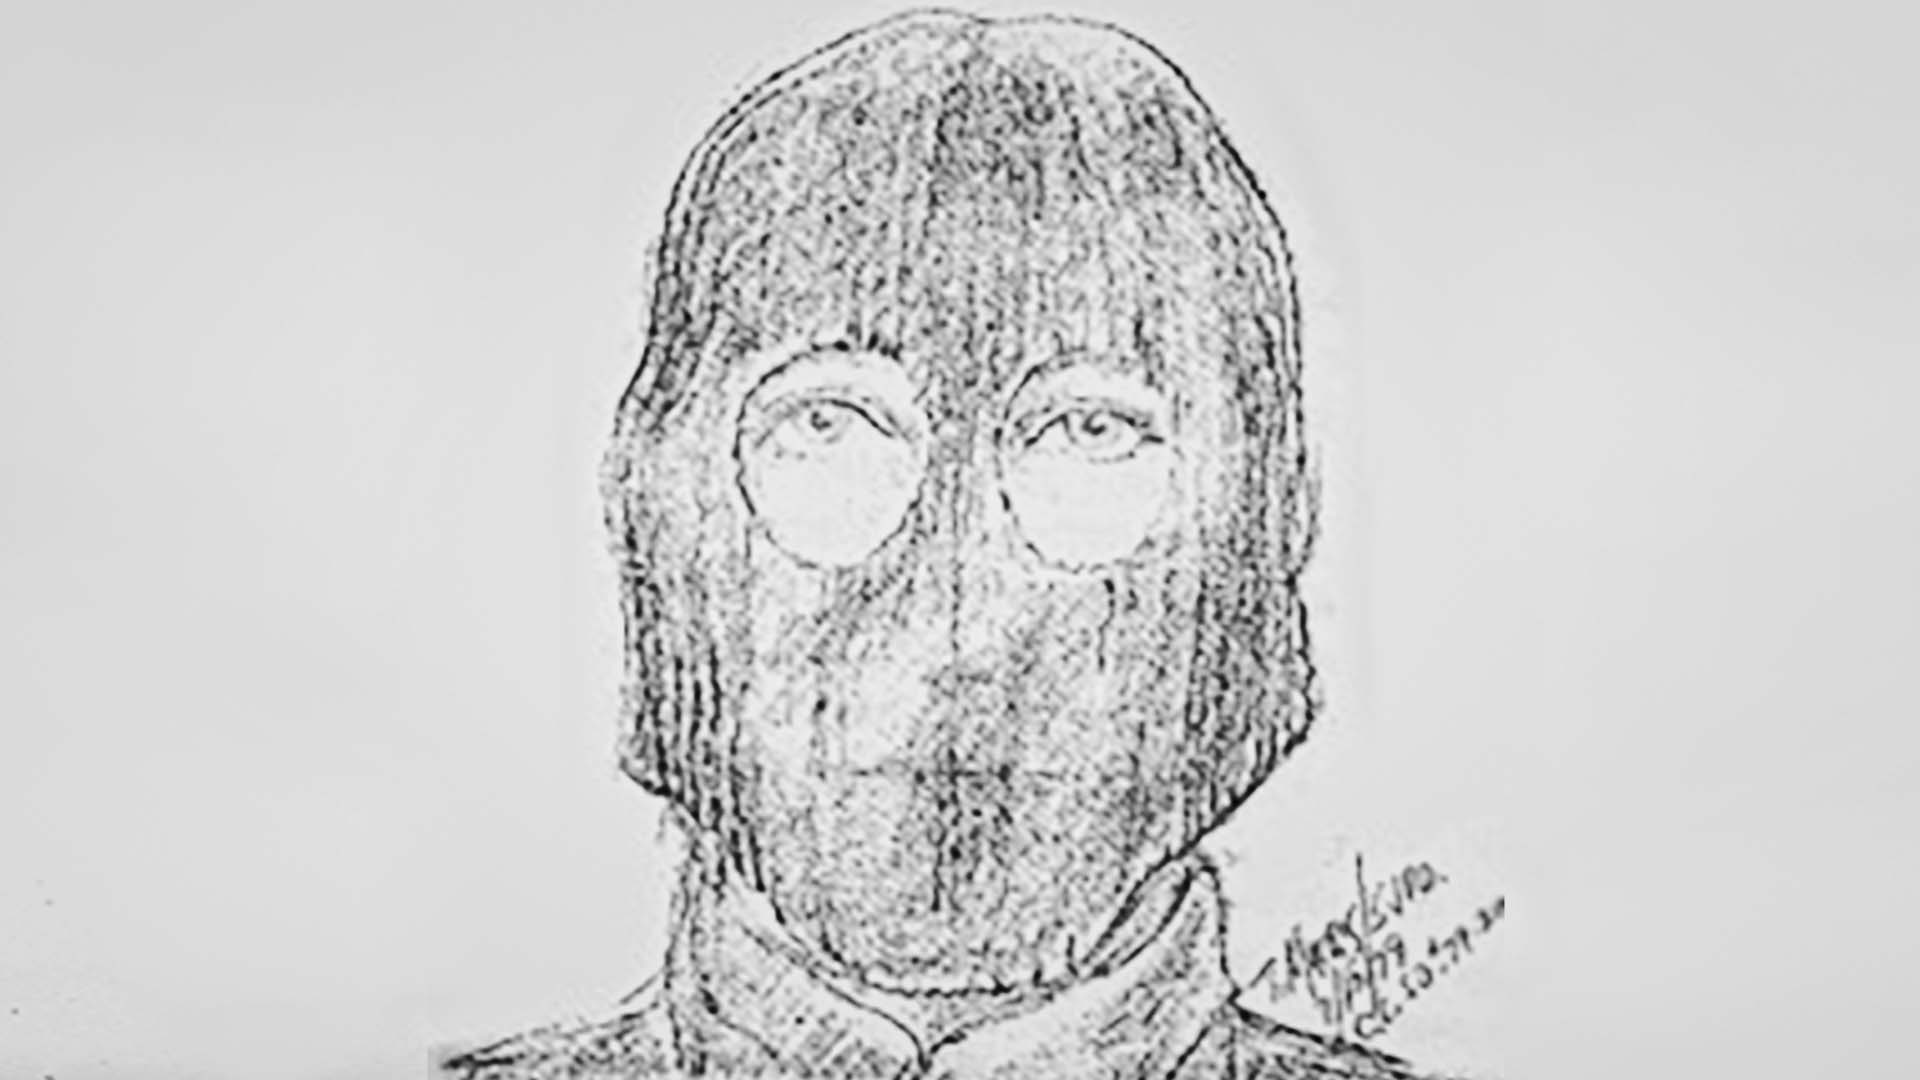 File:Original night stalker - east area rapist - golden state killer - cold  case - artist rendering.jpg - Wikipedia